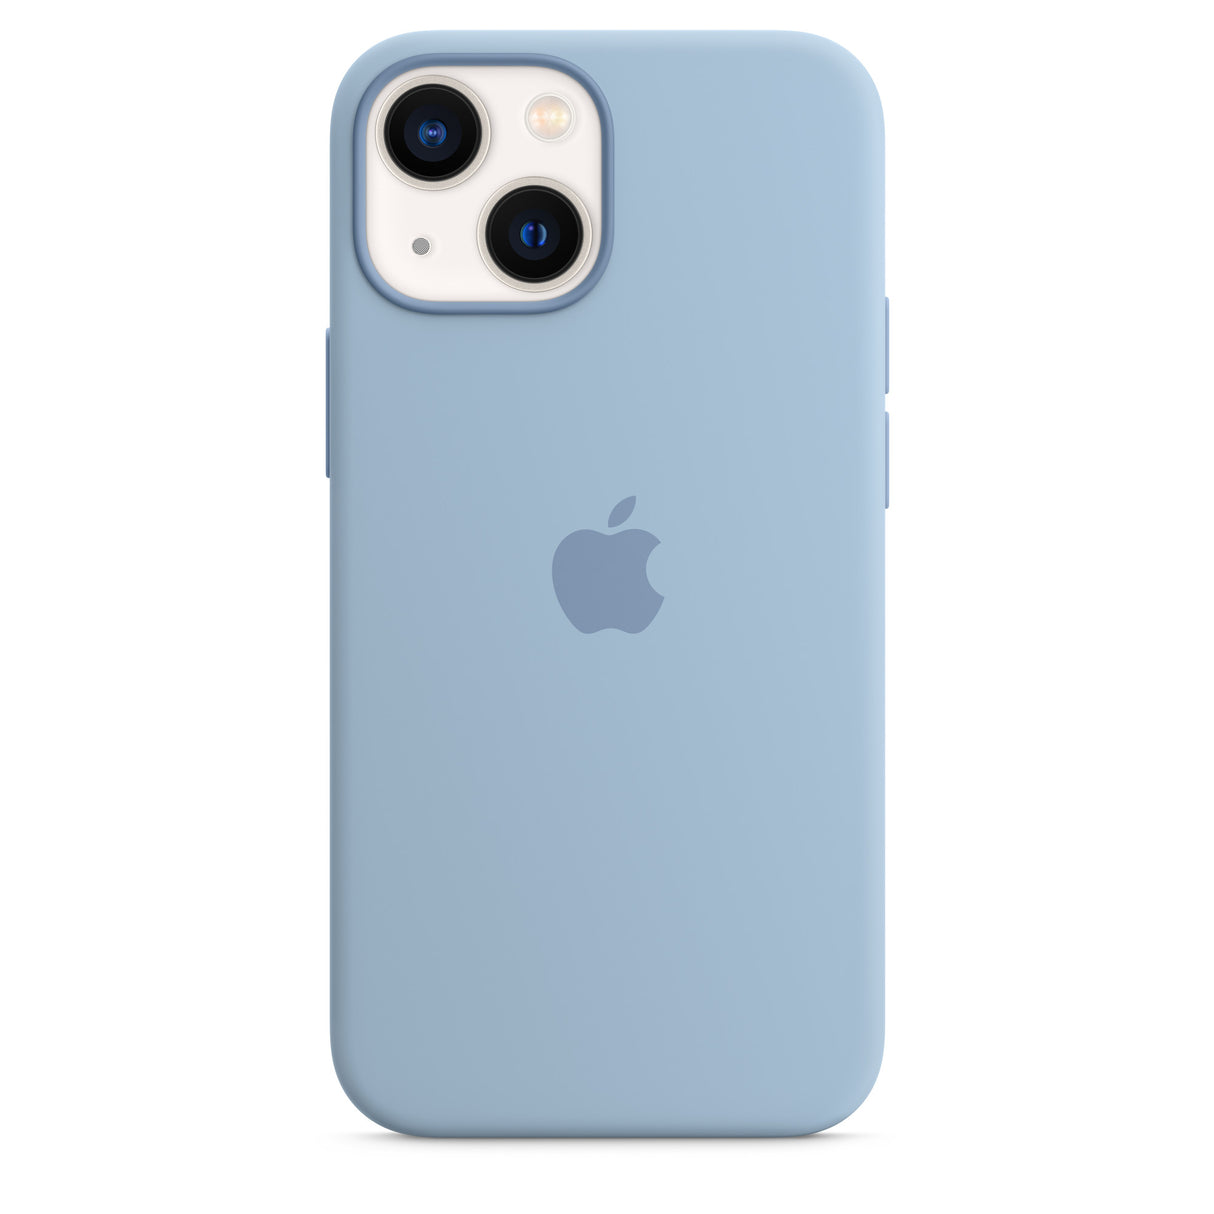 iPhone 13 mini Silicone Case with MagSafe - Blue Fog OB